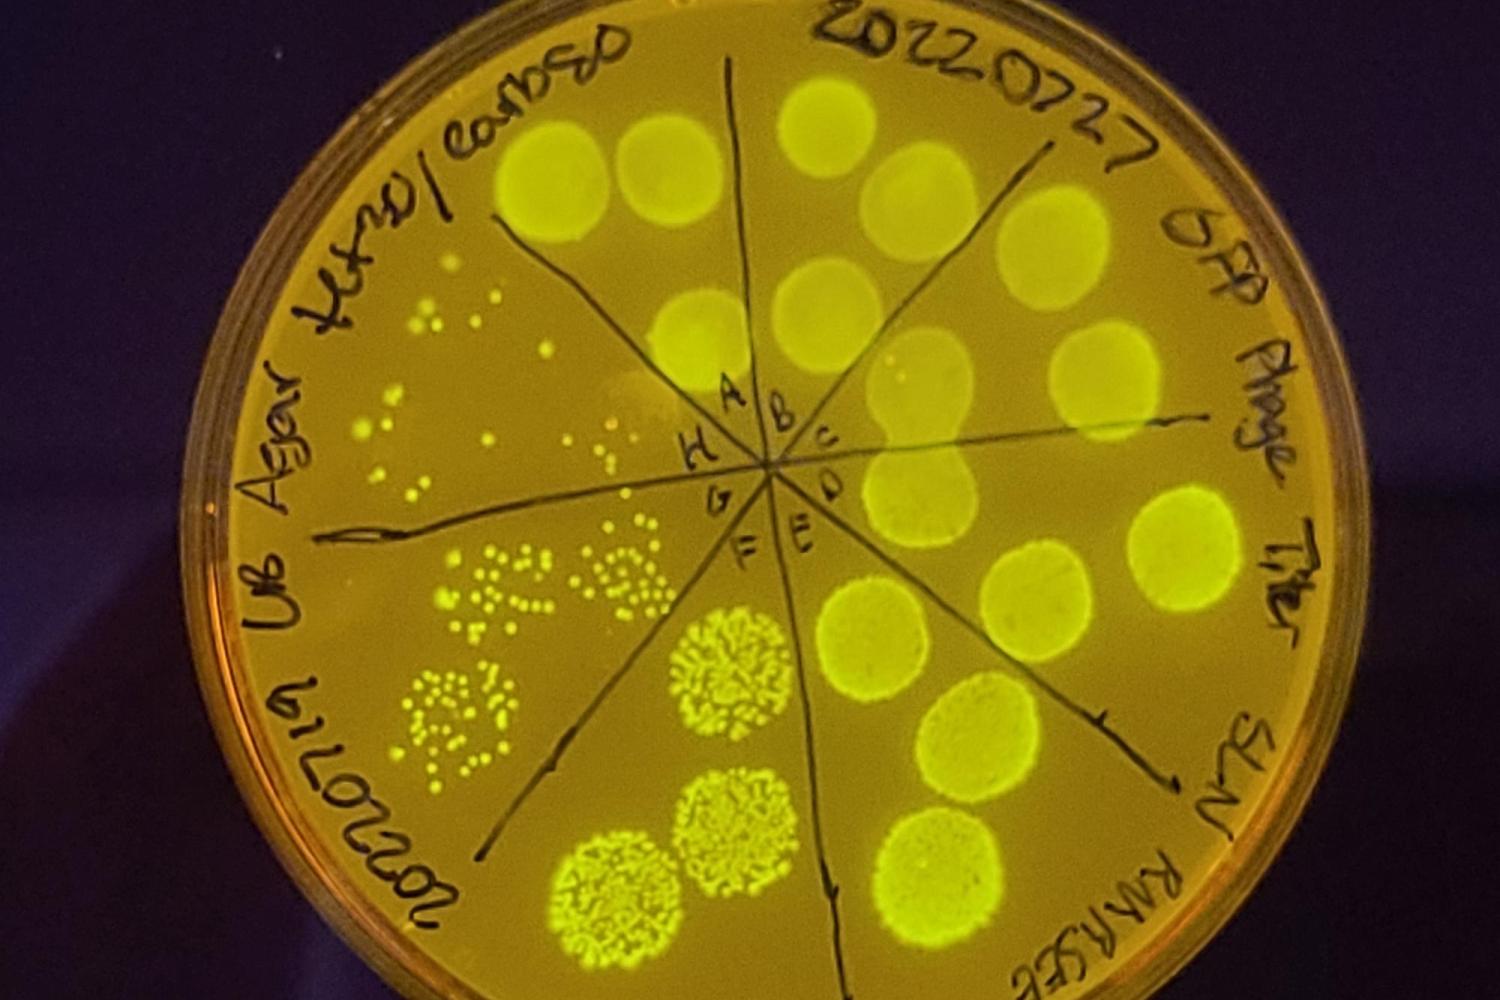 Fluorescent E coli cells expressing GFP